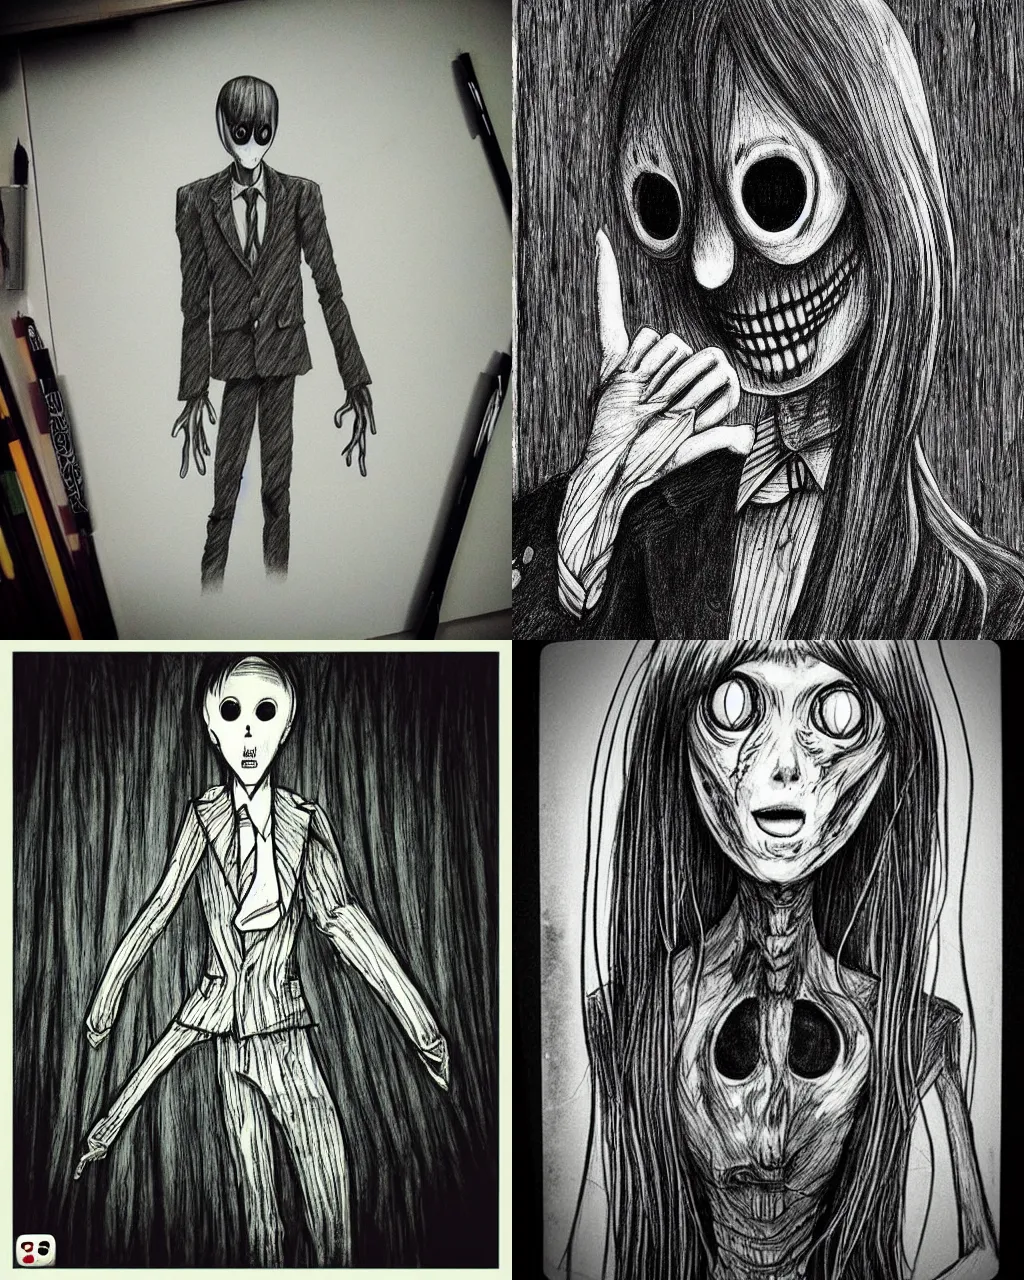 Prompt: “Slenderman, Junji Ito, drawing, creepy”